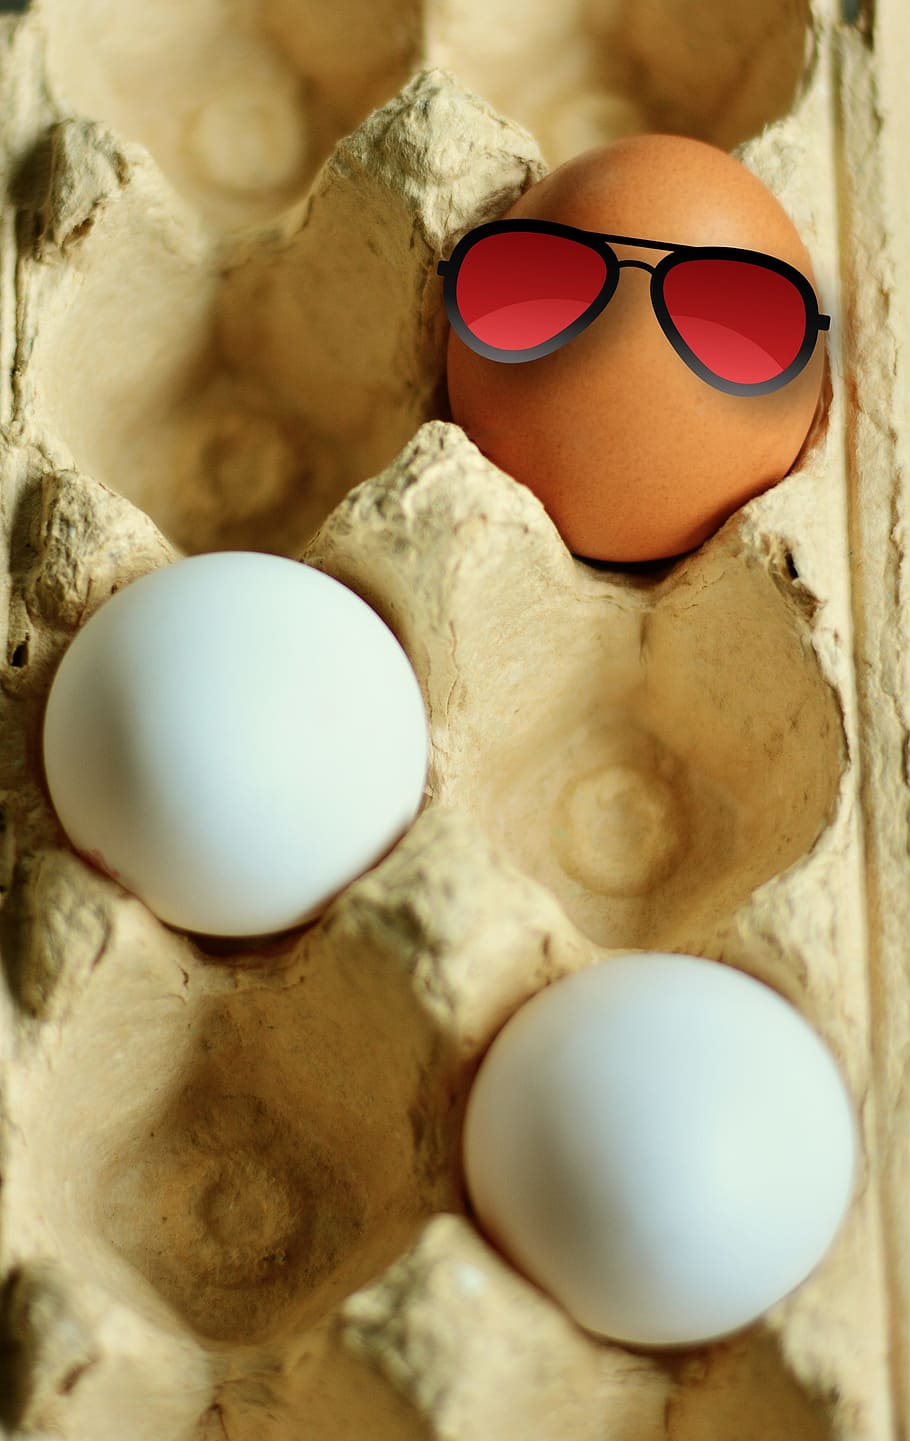 tres, huevos, bandeja de huevos, huevo, huevo de gallina, huevos marrones, huevos blancos, colorante, cartón de huevos, huevo crudo